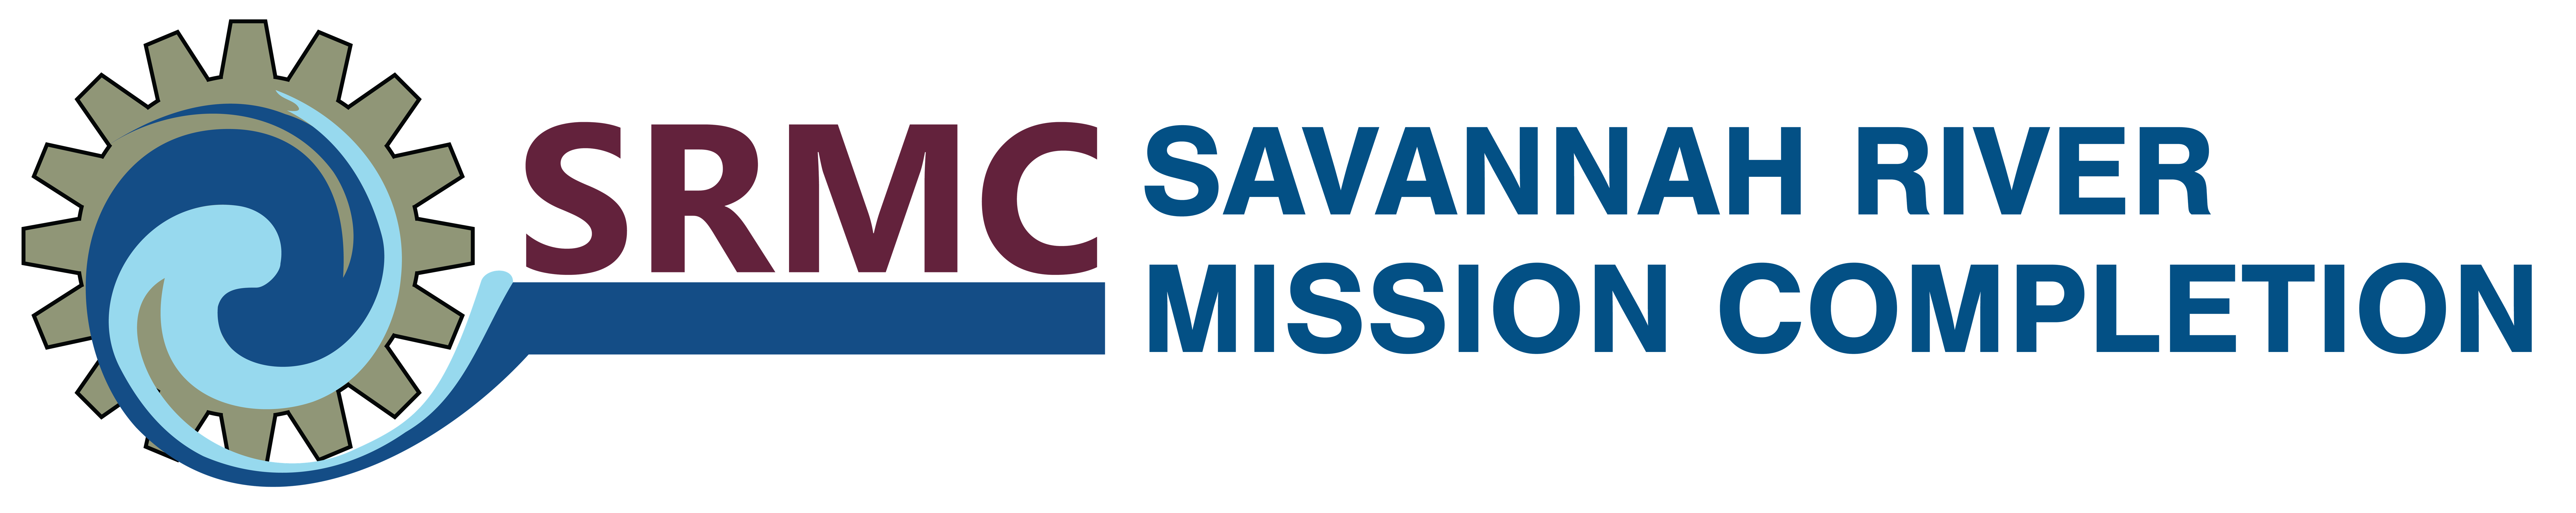 SRMC: Savannah River Mission Completion logo